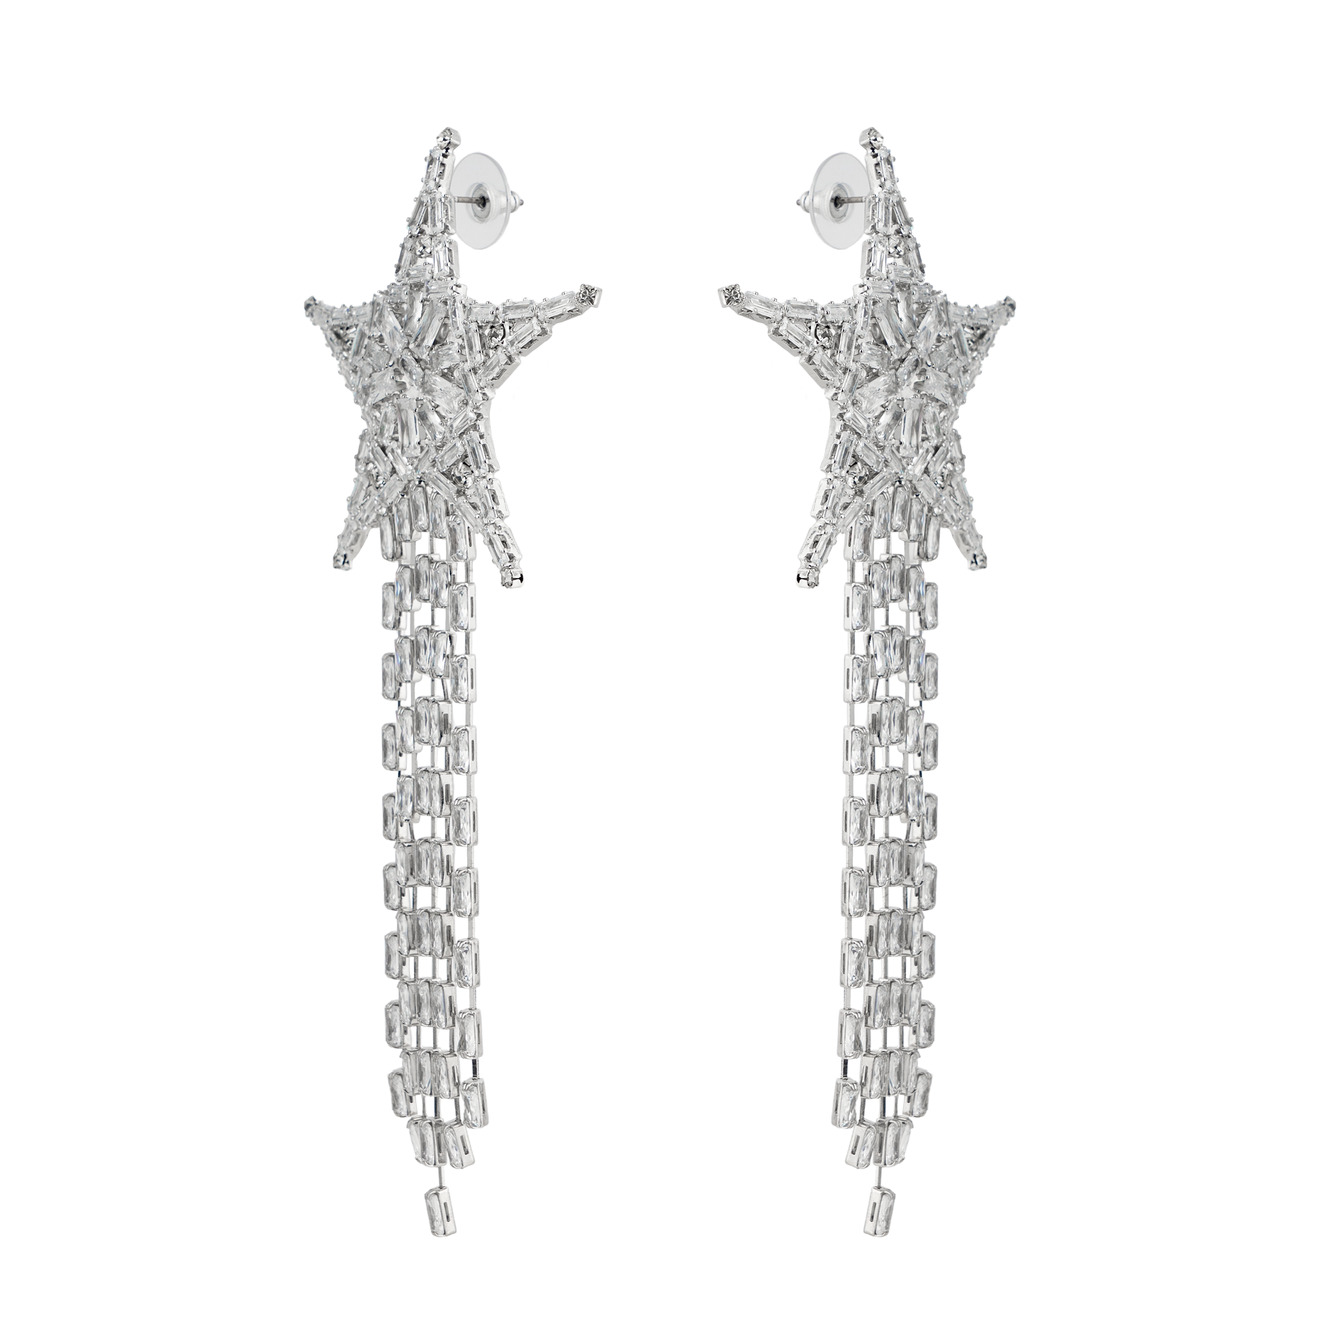 Herald Percy Серебристые бисерные серьги-звезды с кристаллами herald percy серебристые серьги звезды